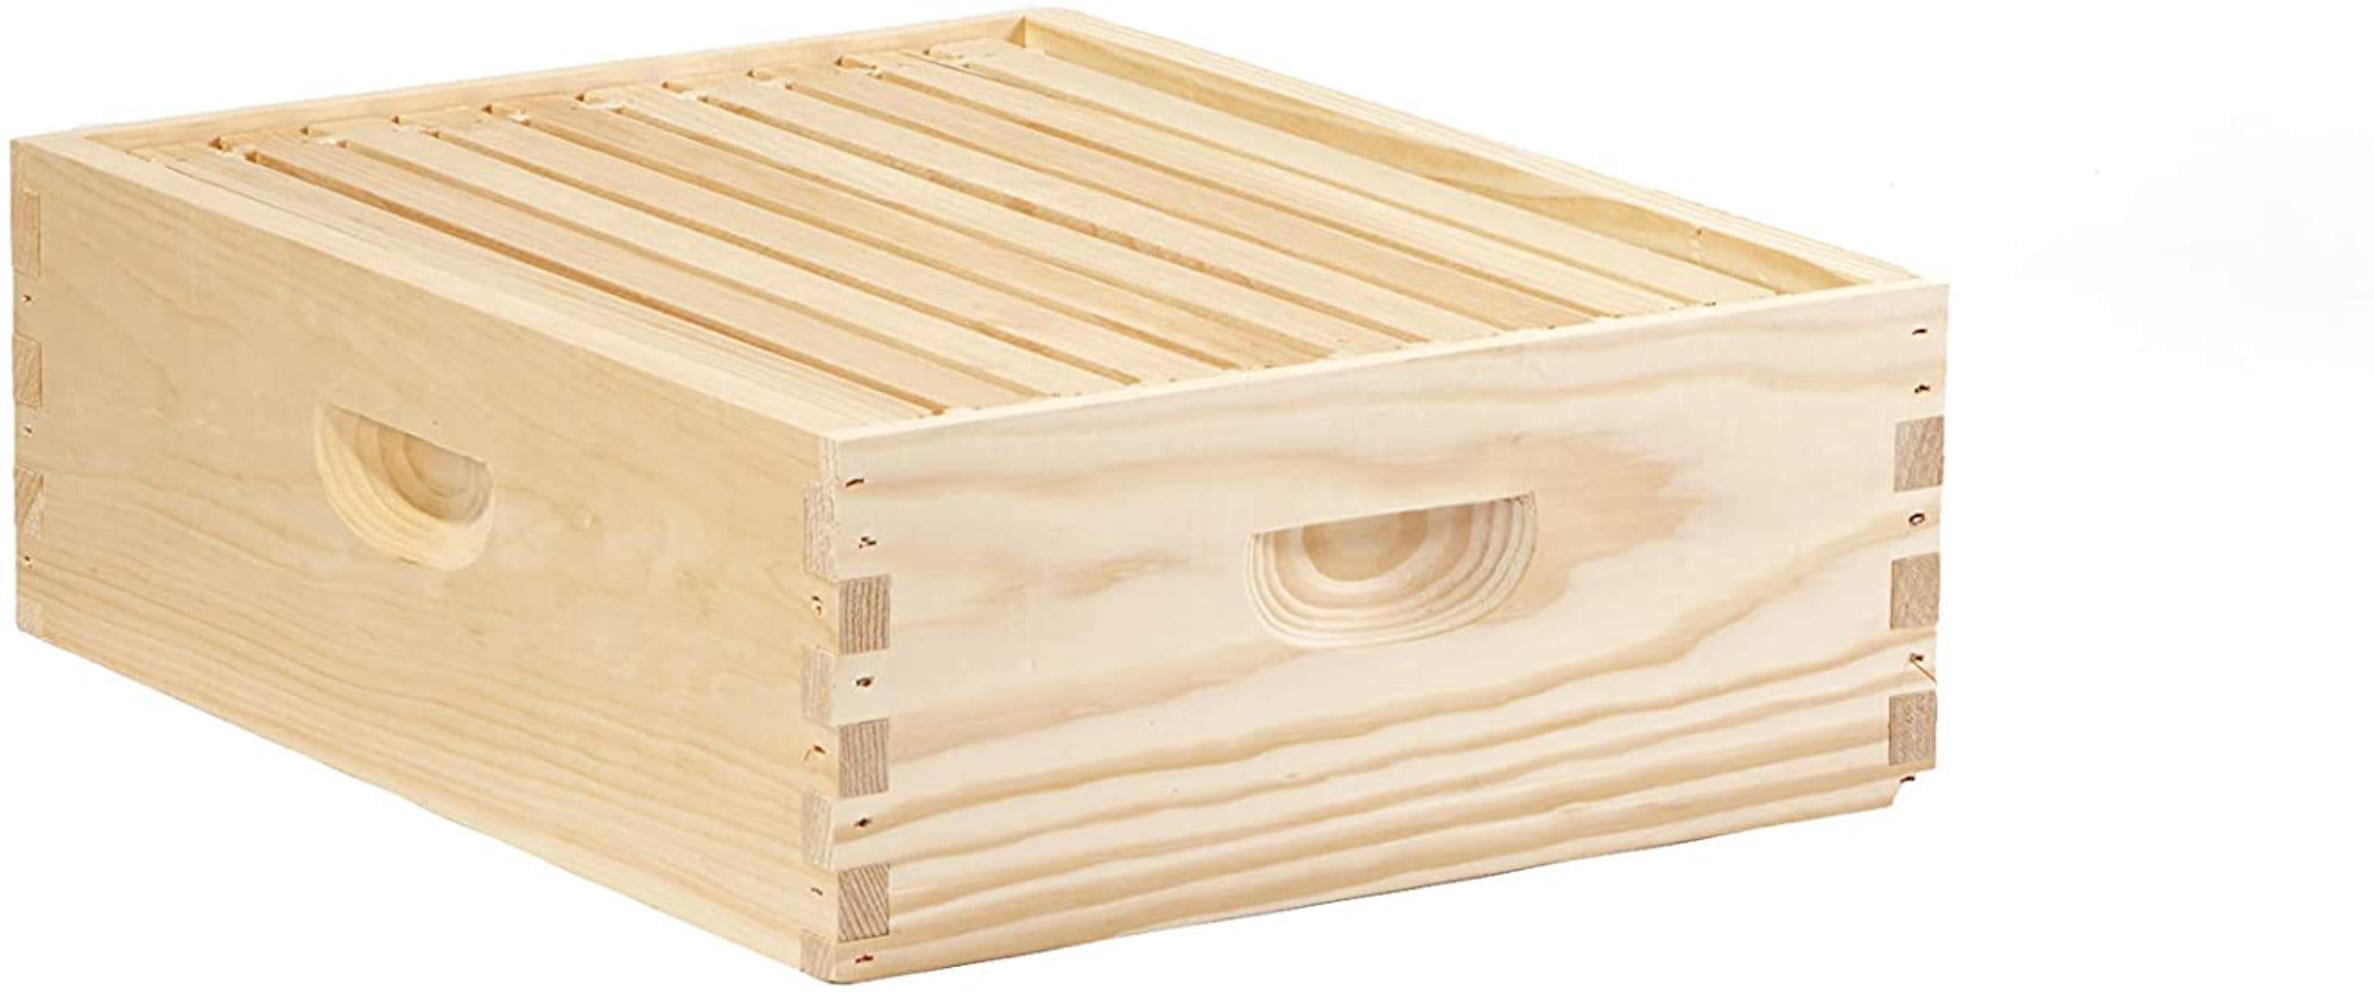 Deep Medium/Deep Hive Body Super Kit with Wood Waxed Plastic Frames Beekeeping Equipment